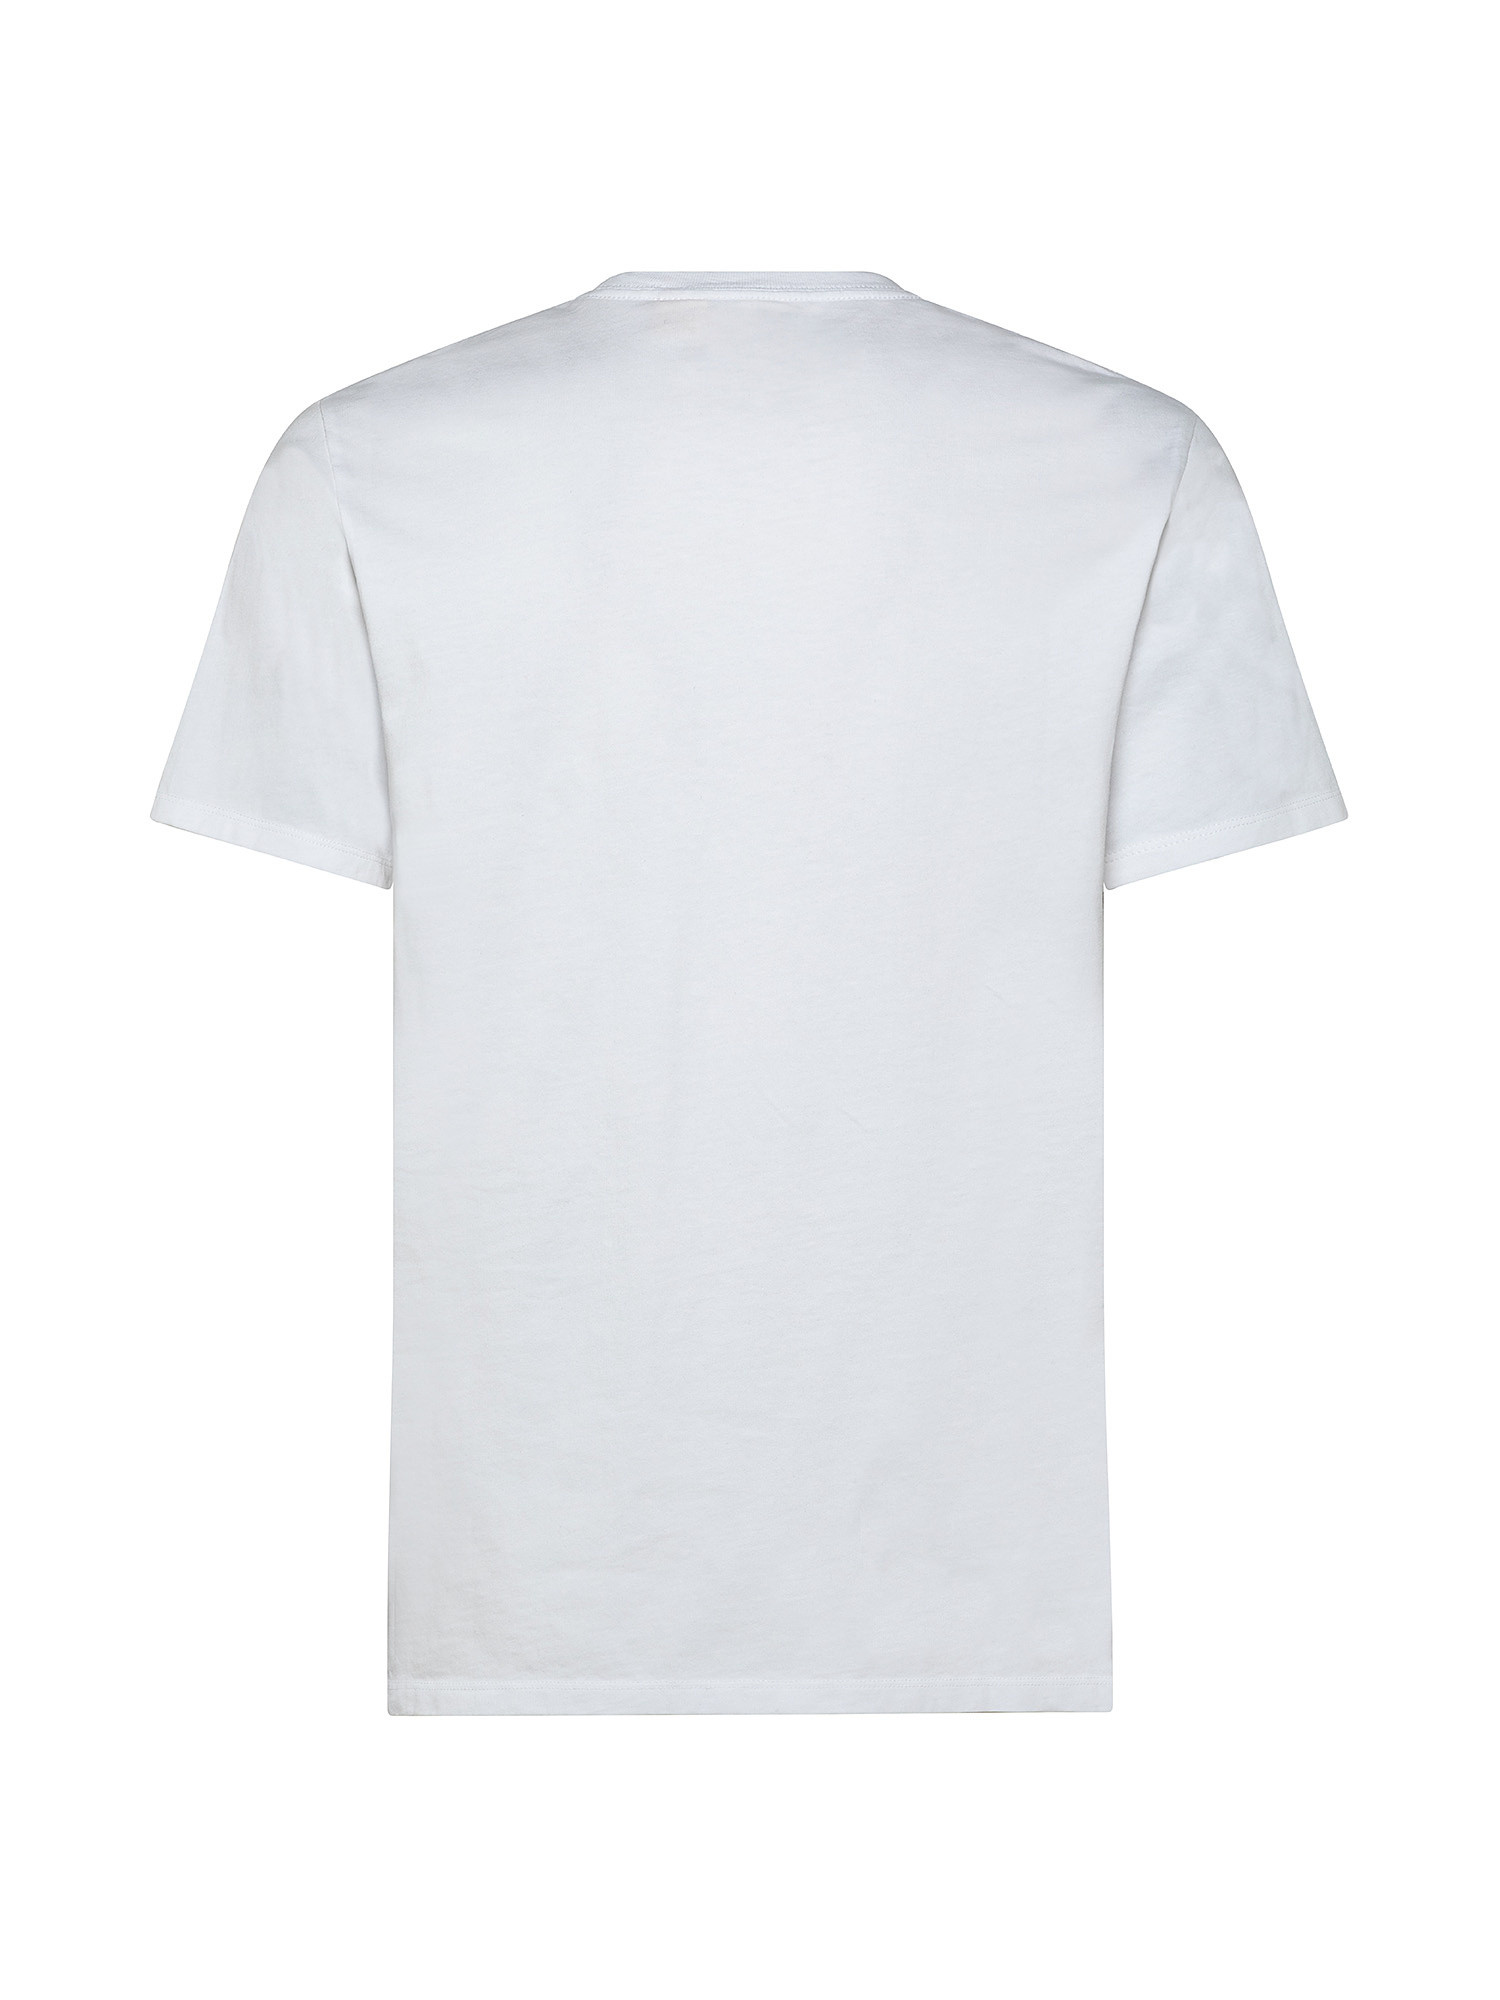 T-shirt Original con logo, Bianco, large image number 1